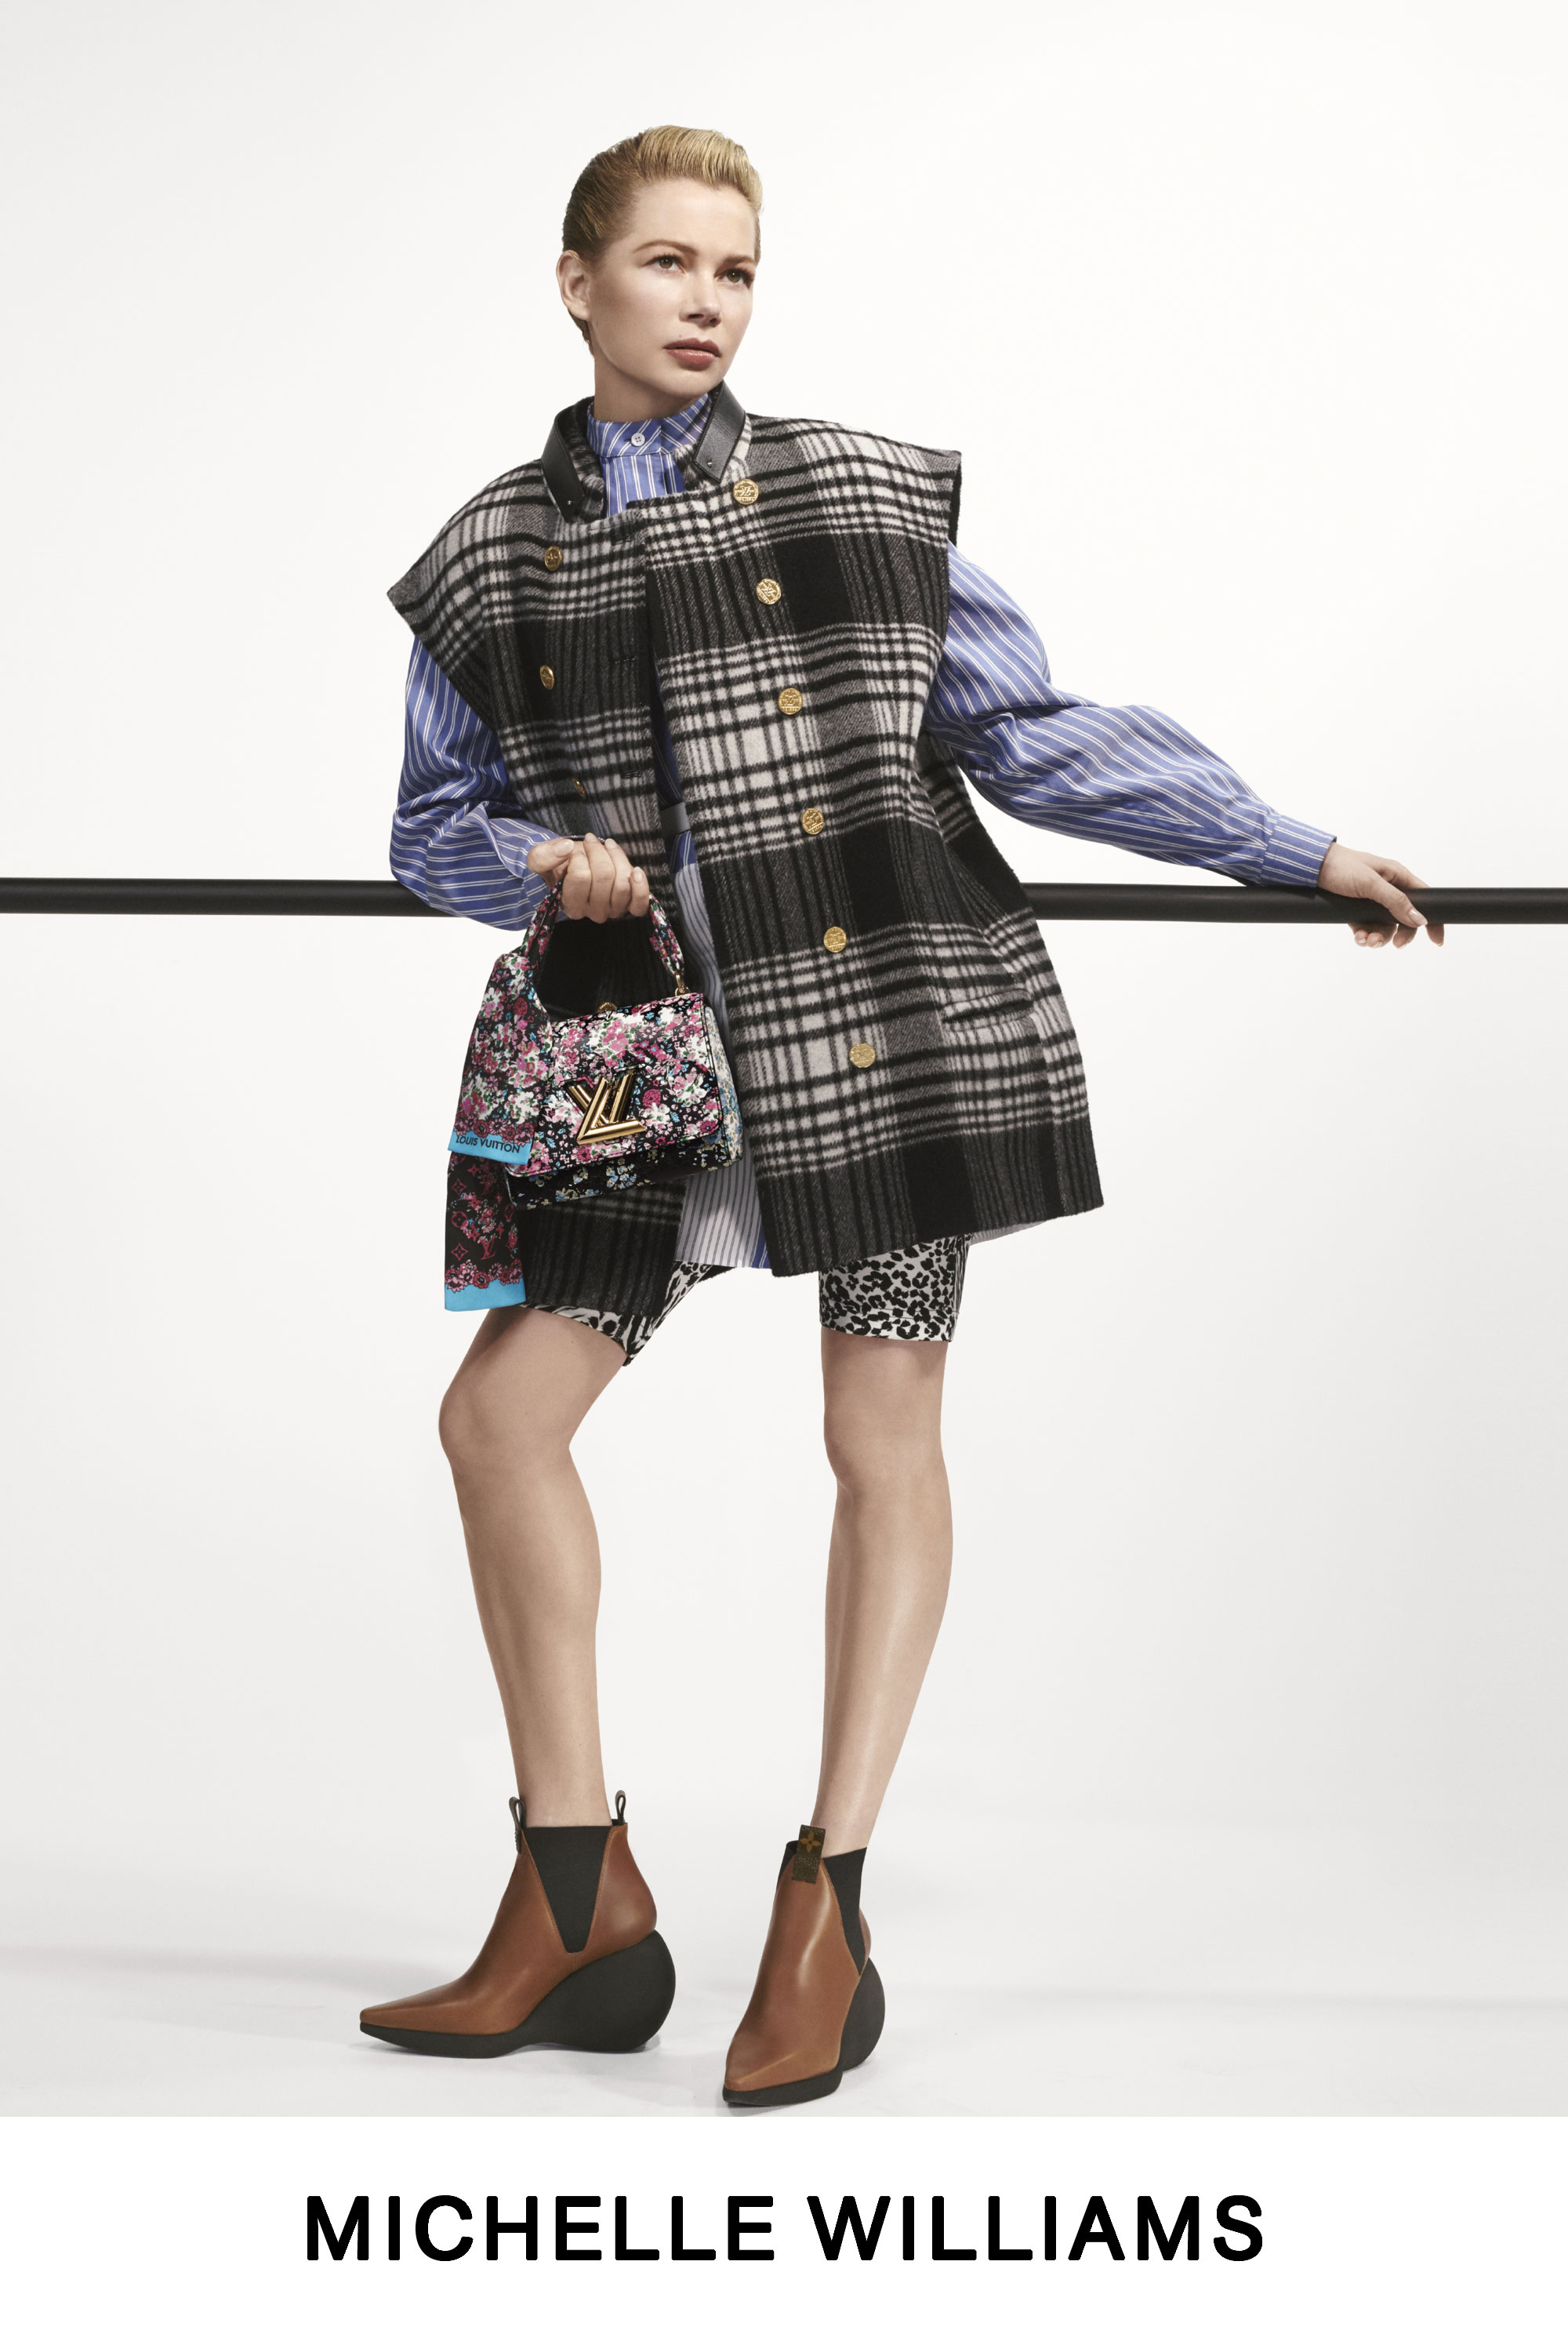 Michelle Williams for Louis Vuitton's Latest Campaign